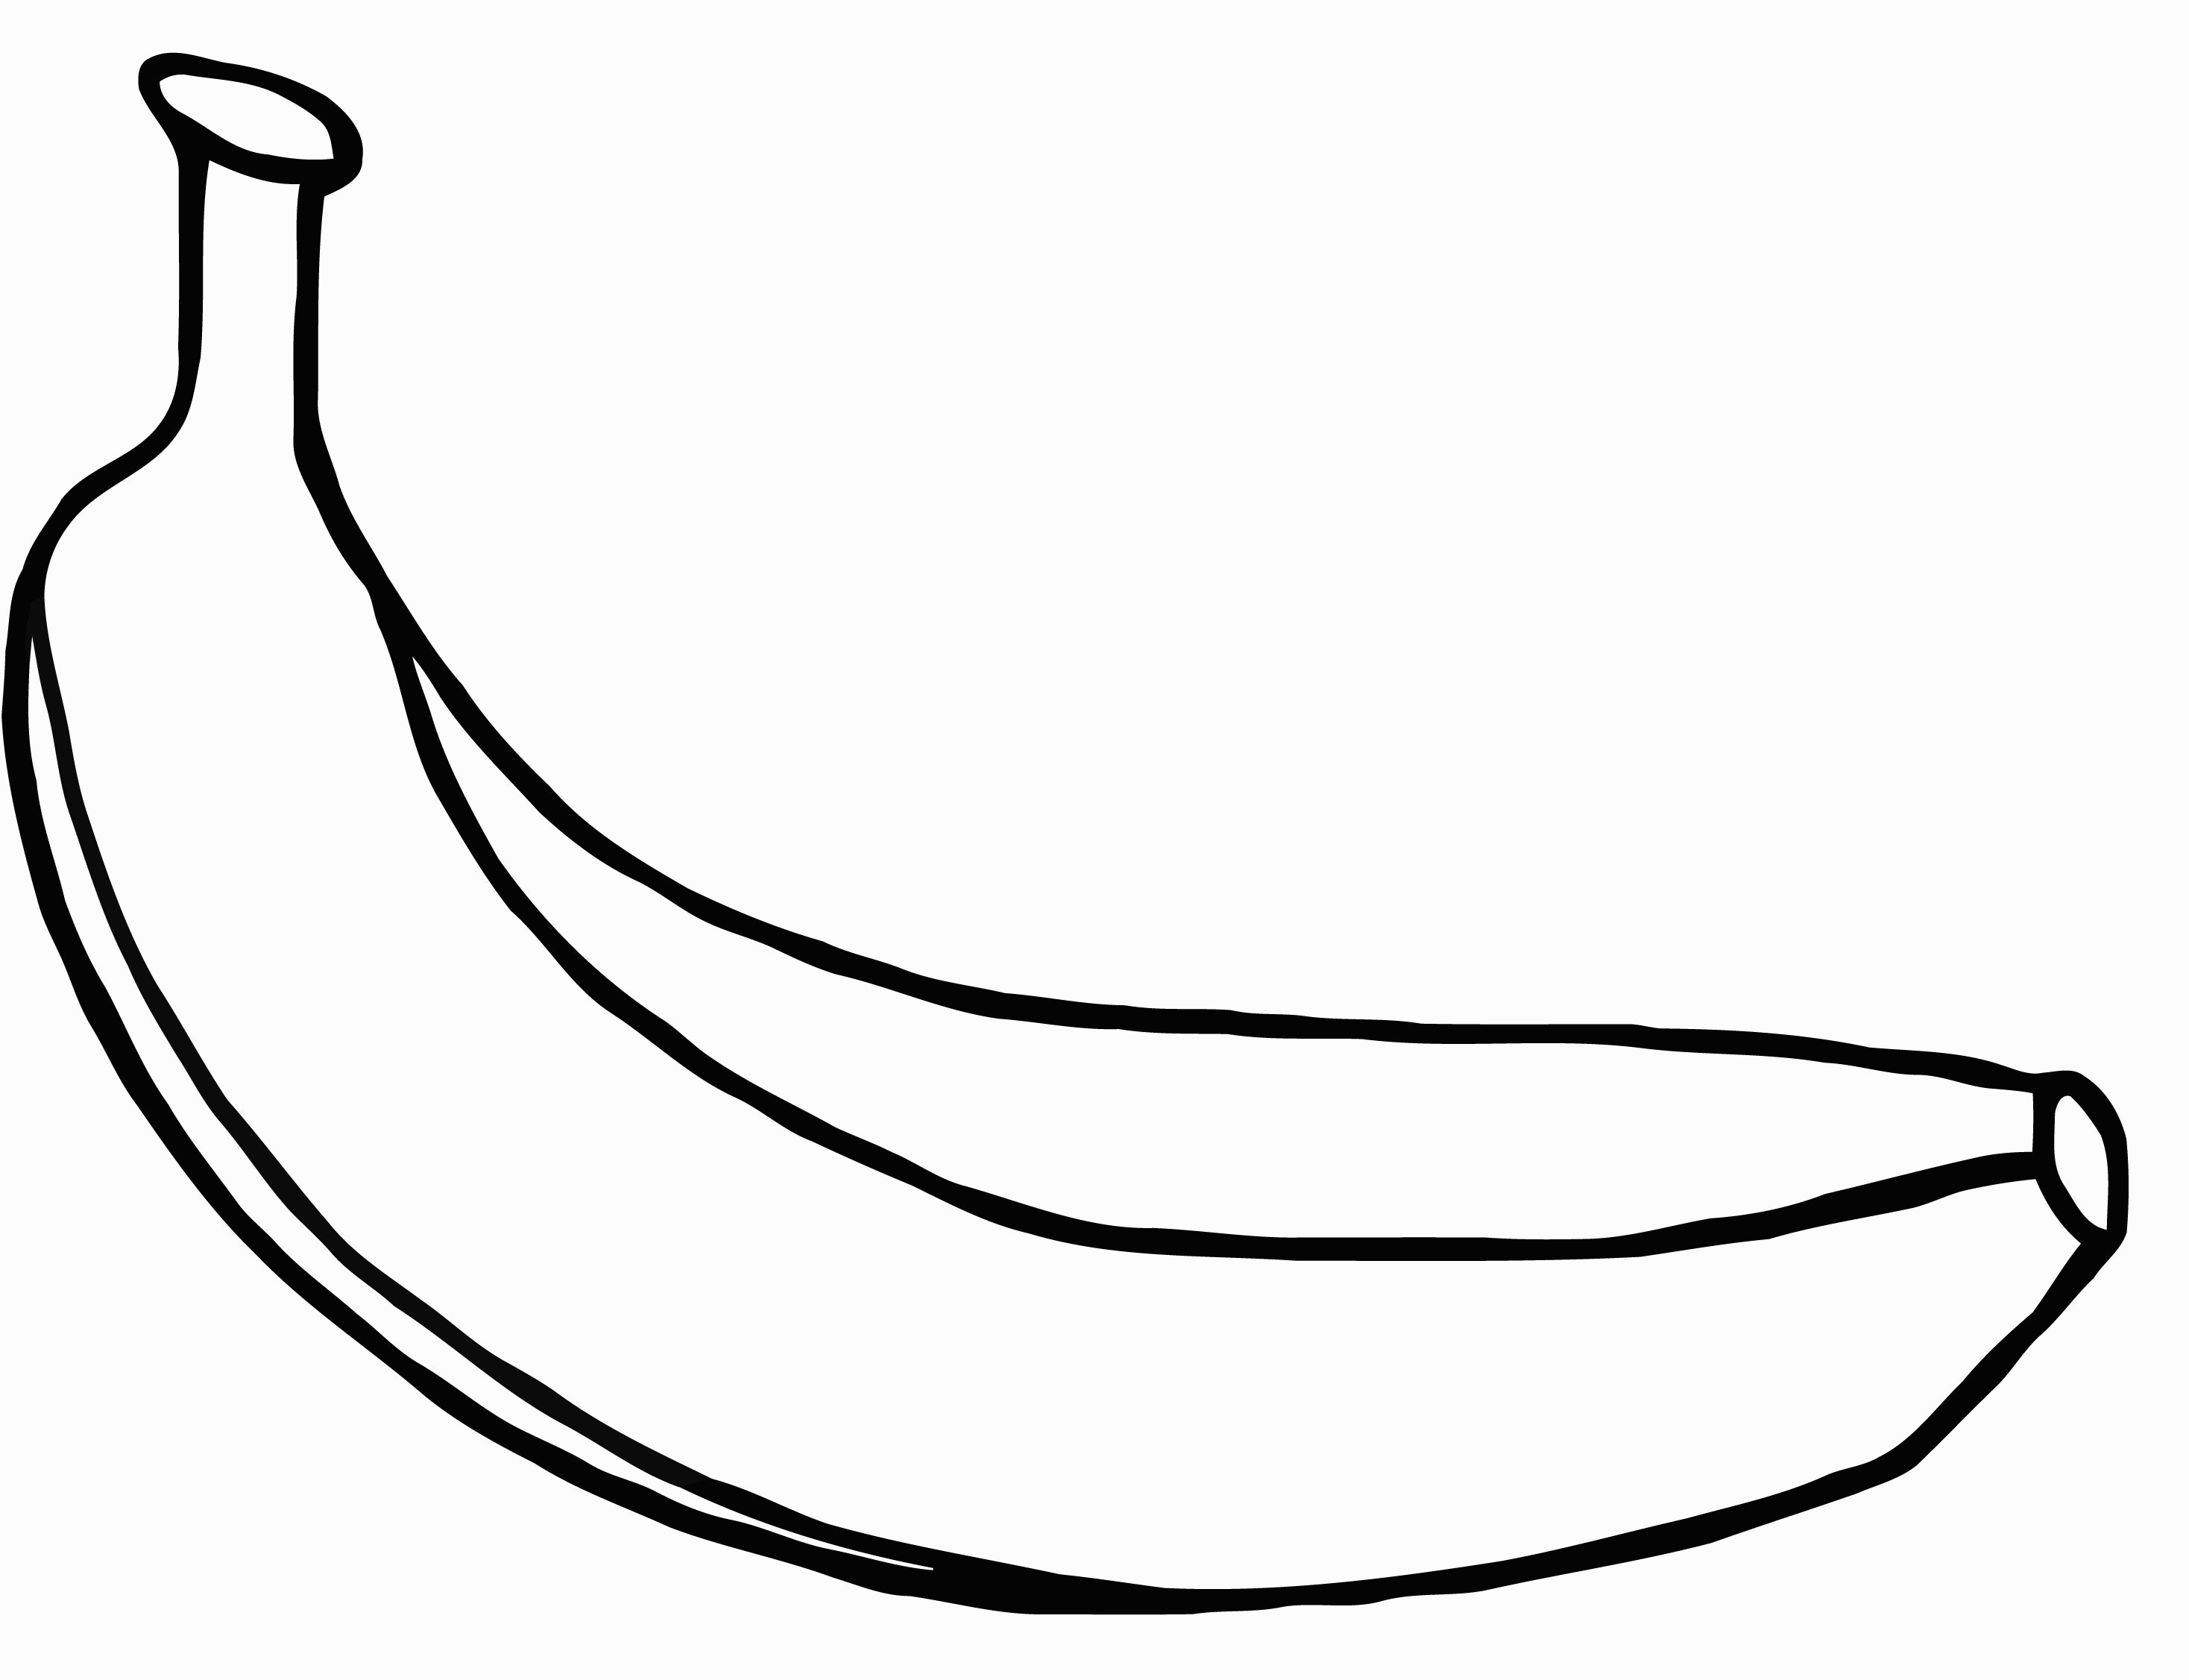 Banana pacman clip art. Bananas clipart black and white